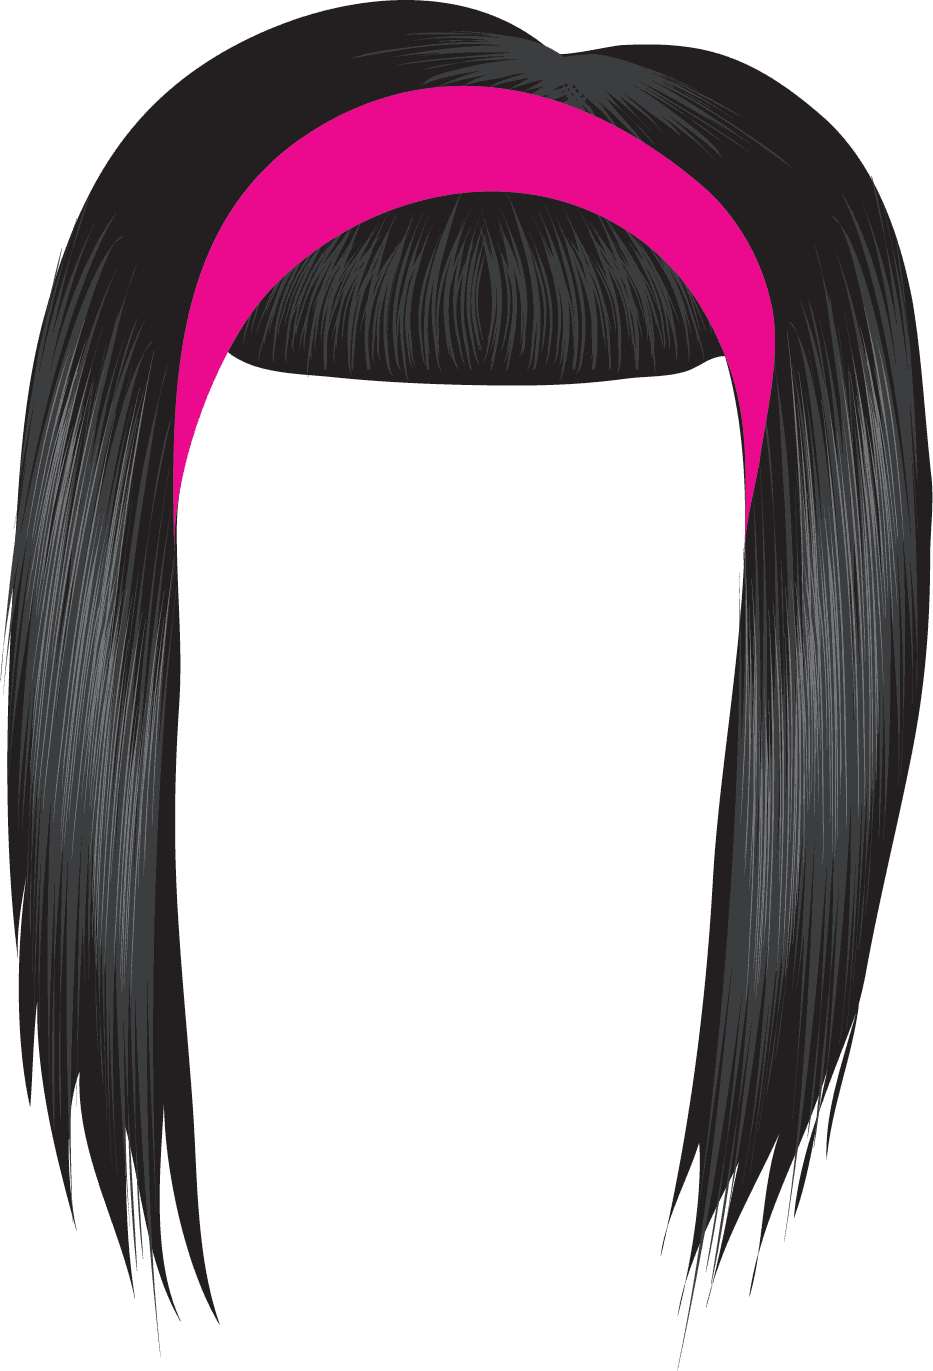 Black Hair clipart #16, Download drawings